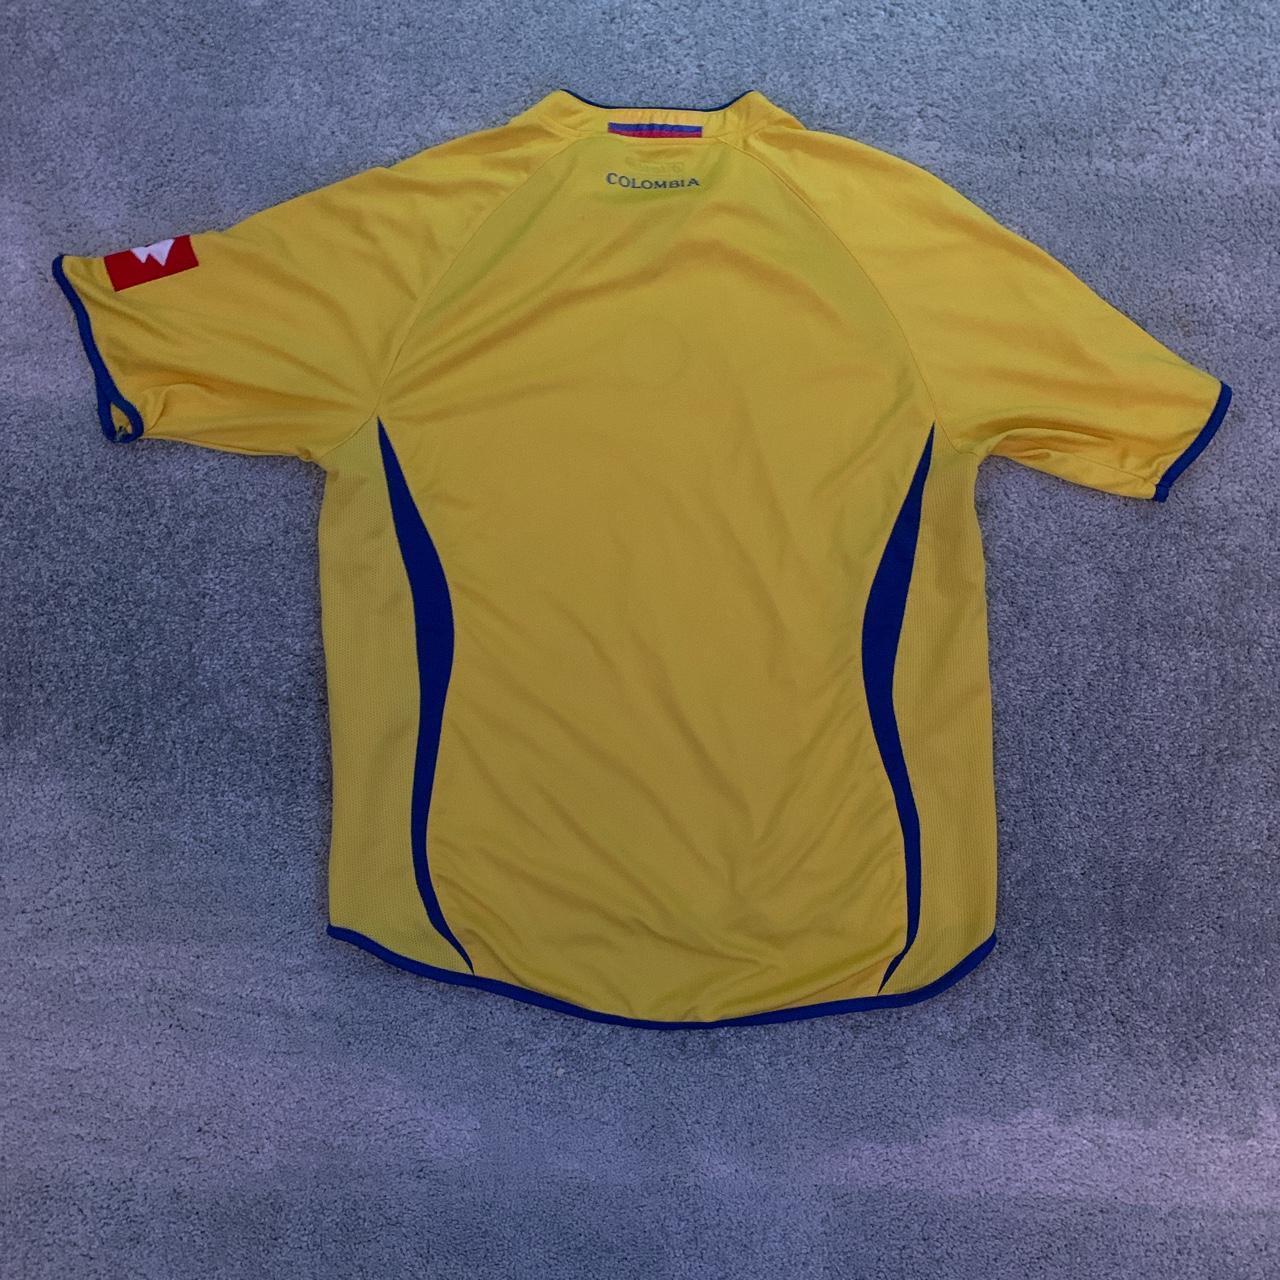 Colombia 1990 Retro Home Yellow Futbol Shirt Vintage - Depop